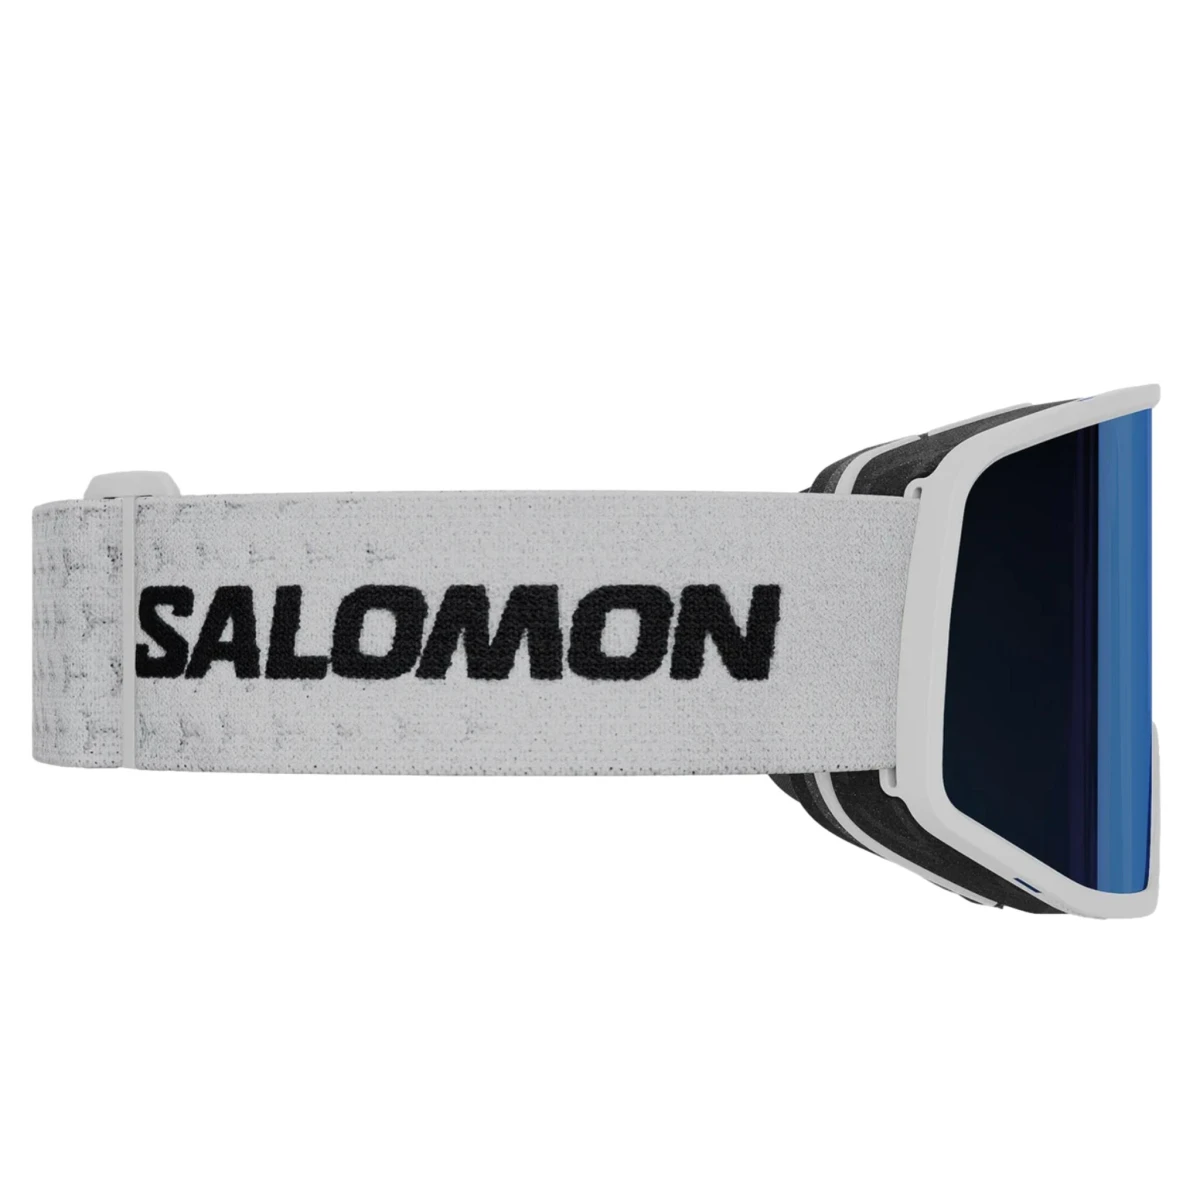 Salomon Sentry pro white sigma